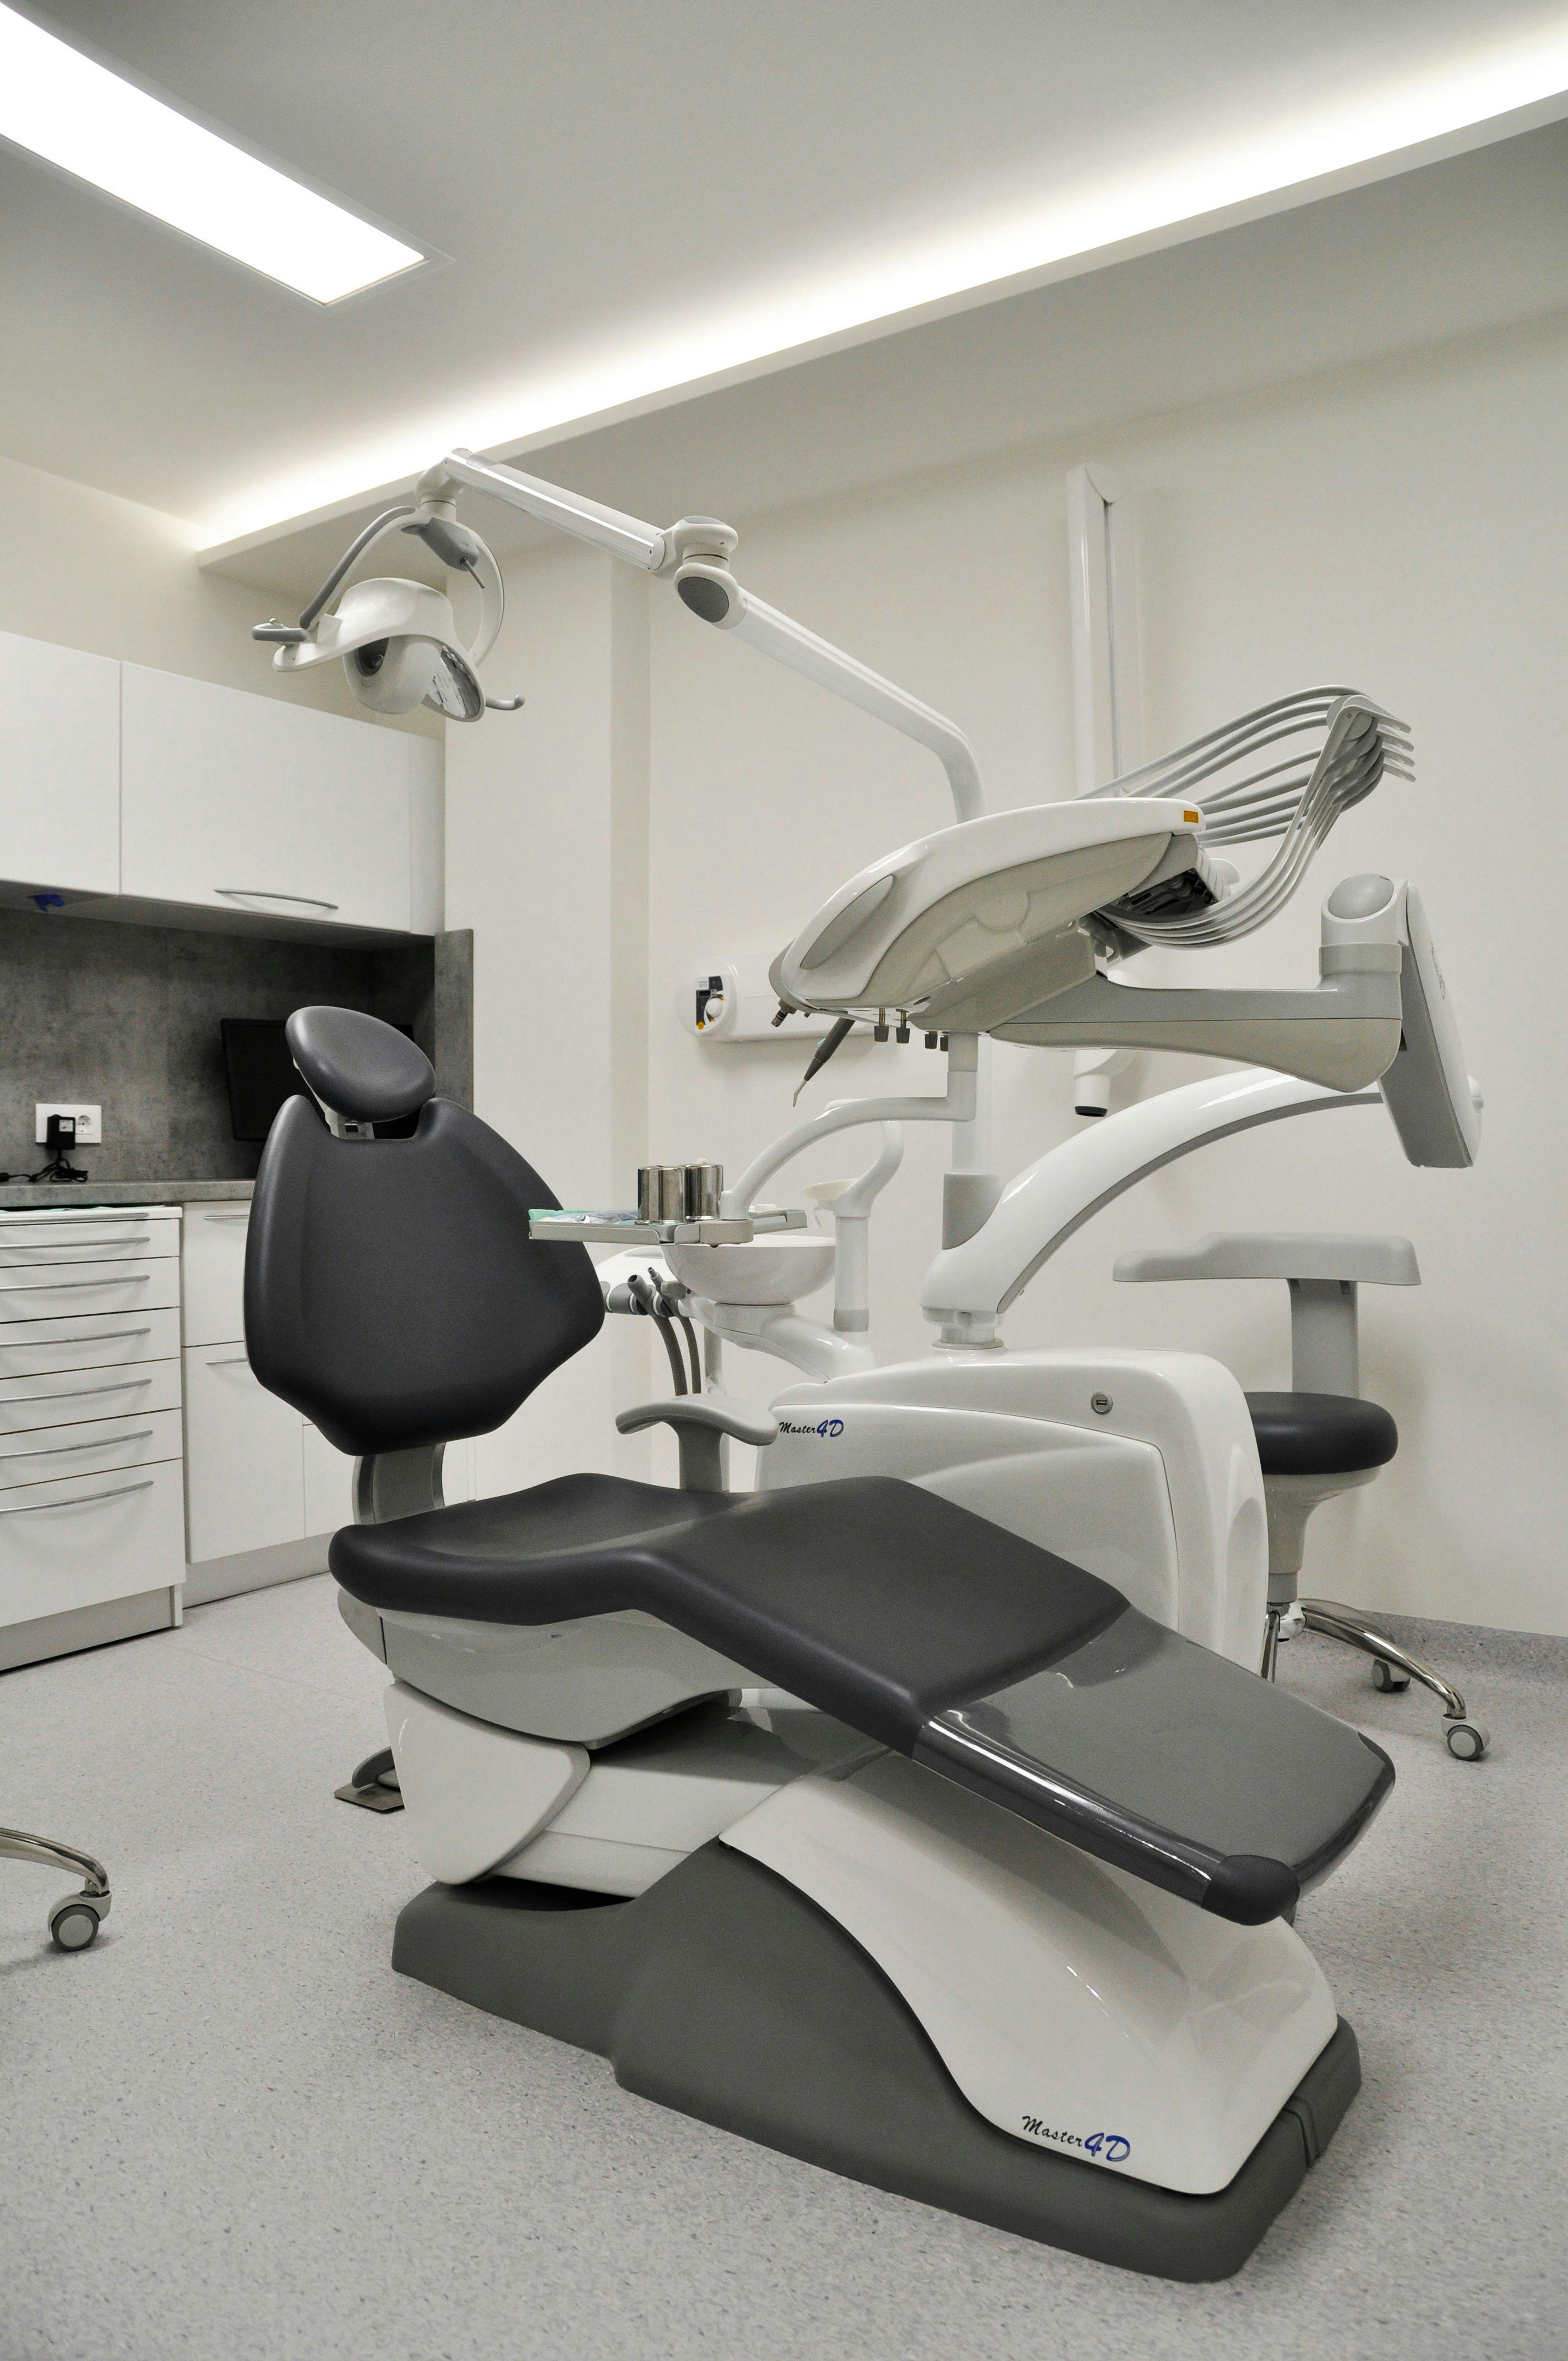 Gabinete dental